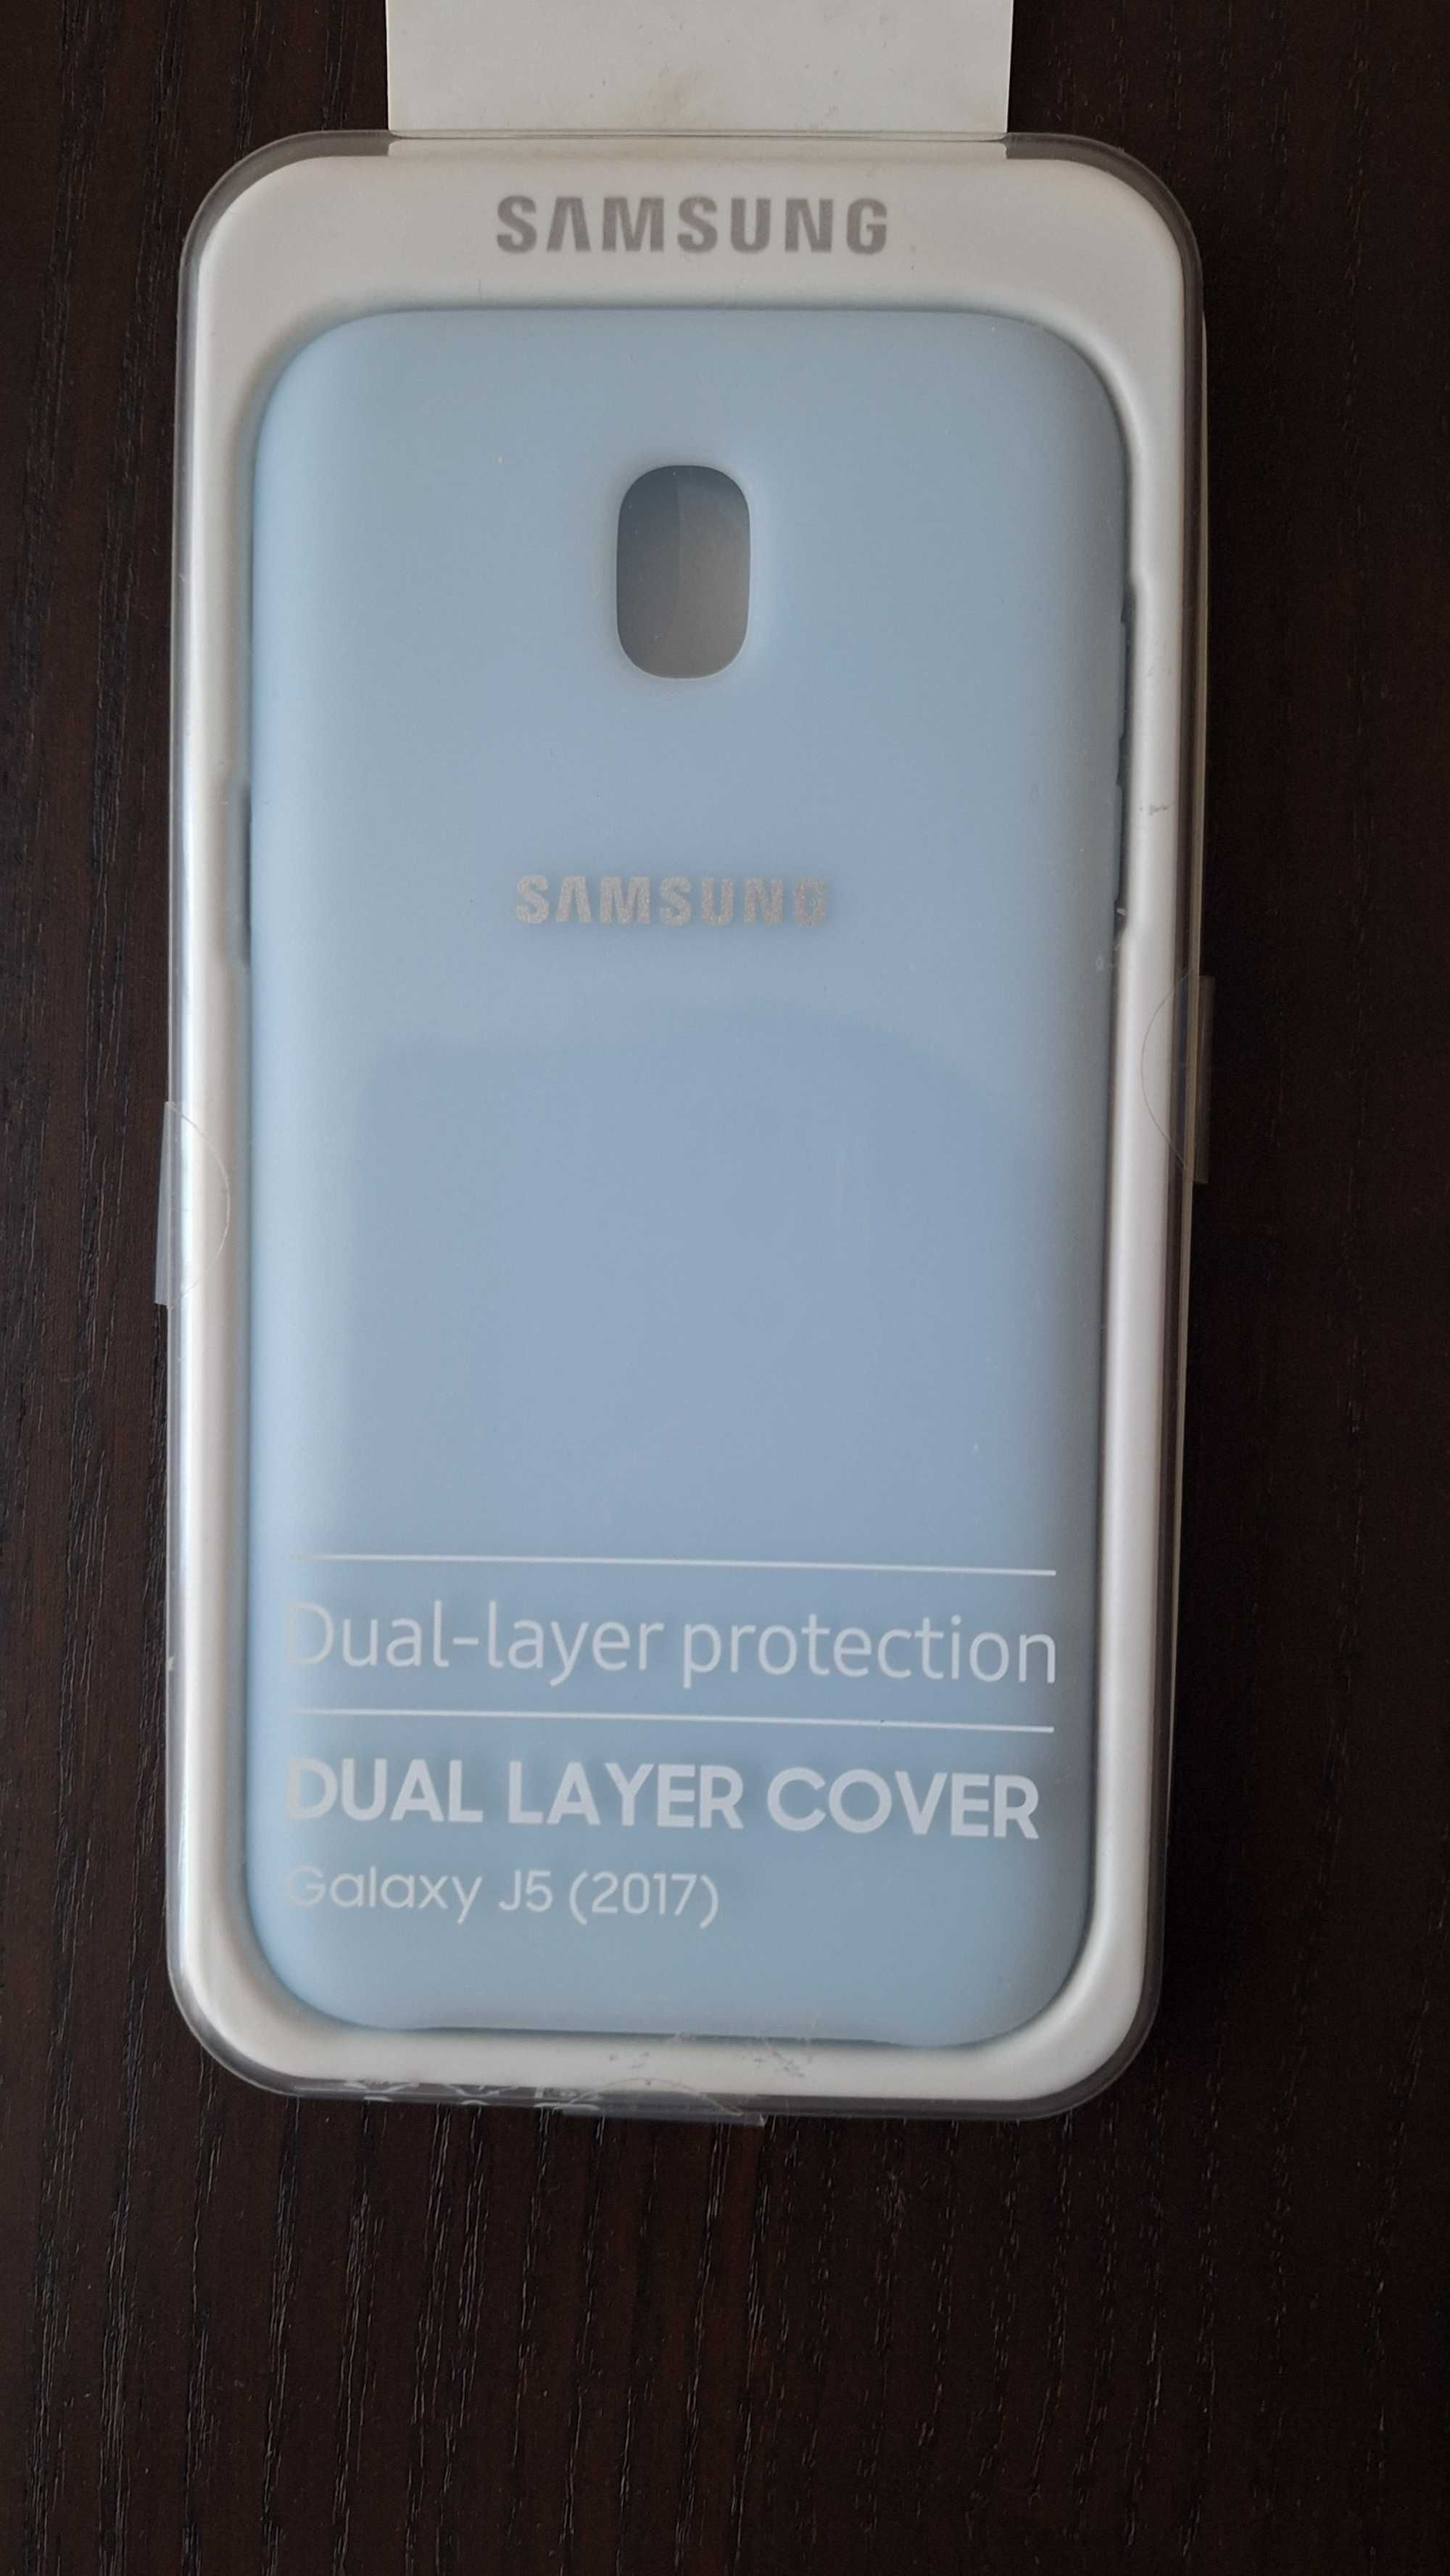 Samsung Dual-Layer Protection dla Galaxy J5 2017